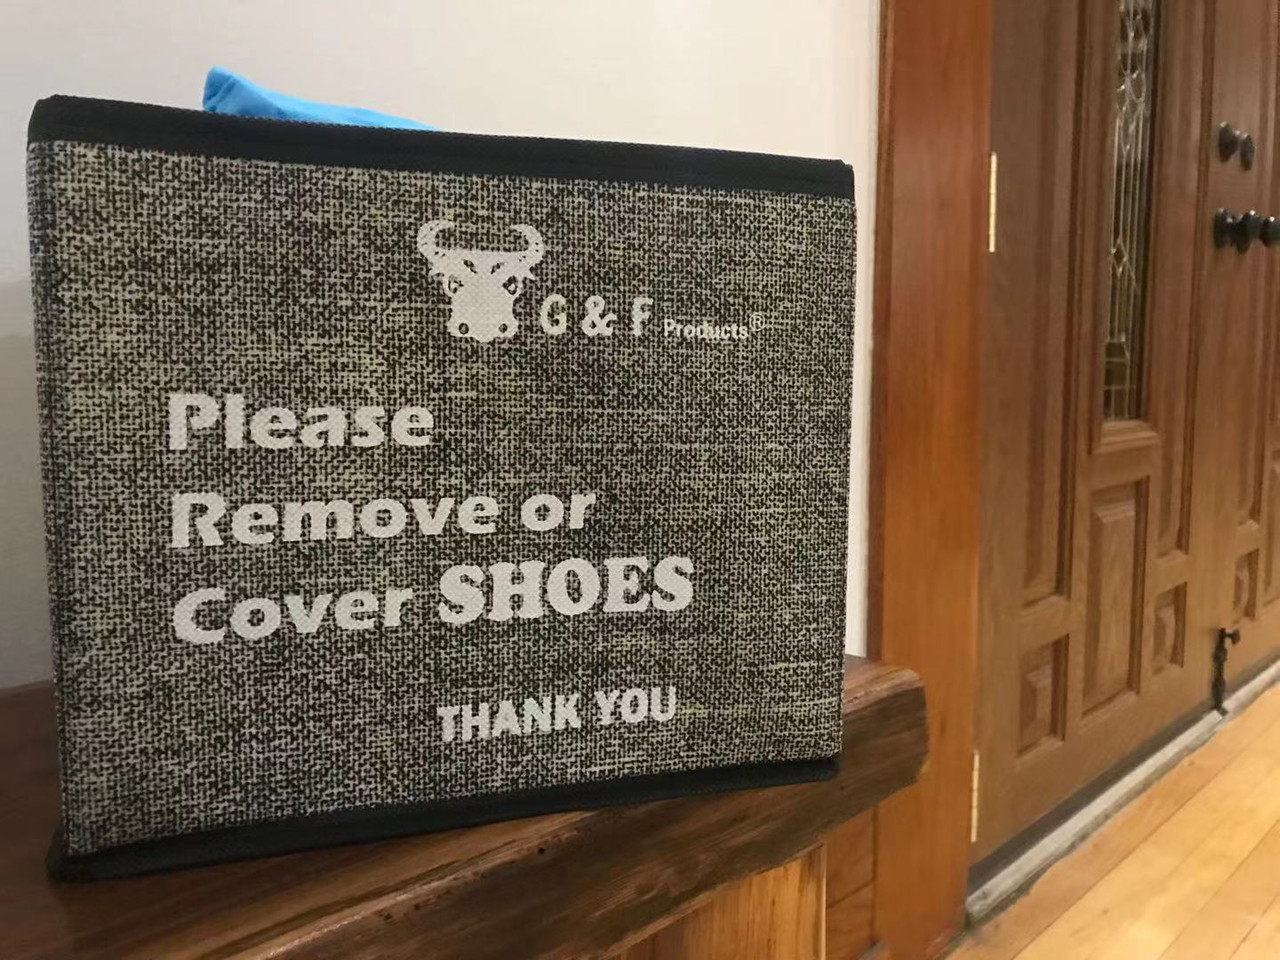 disposable shoe cover box for realtors